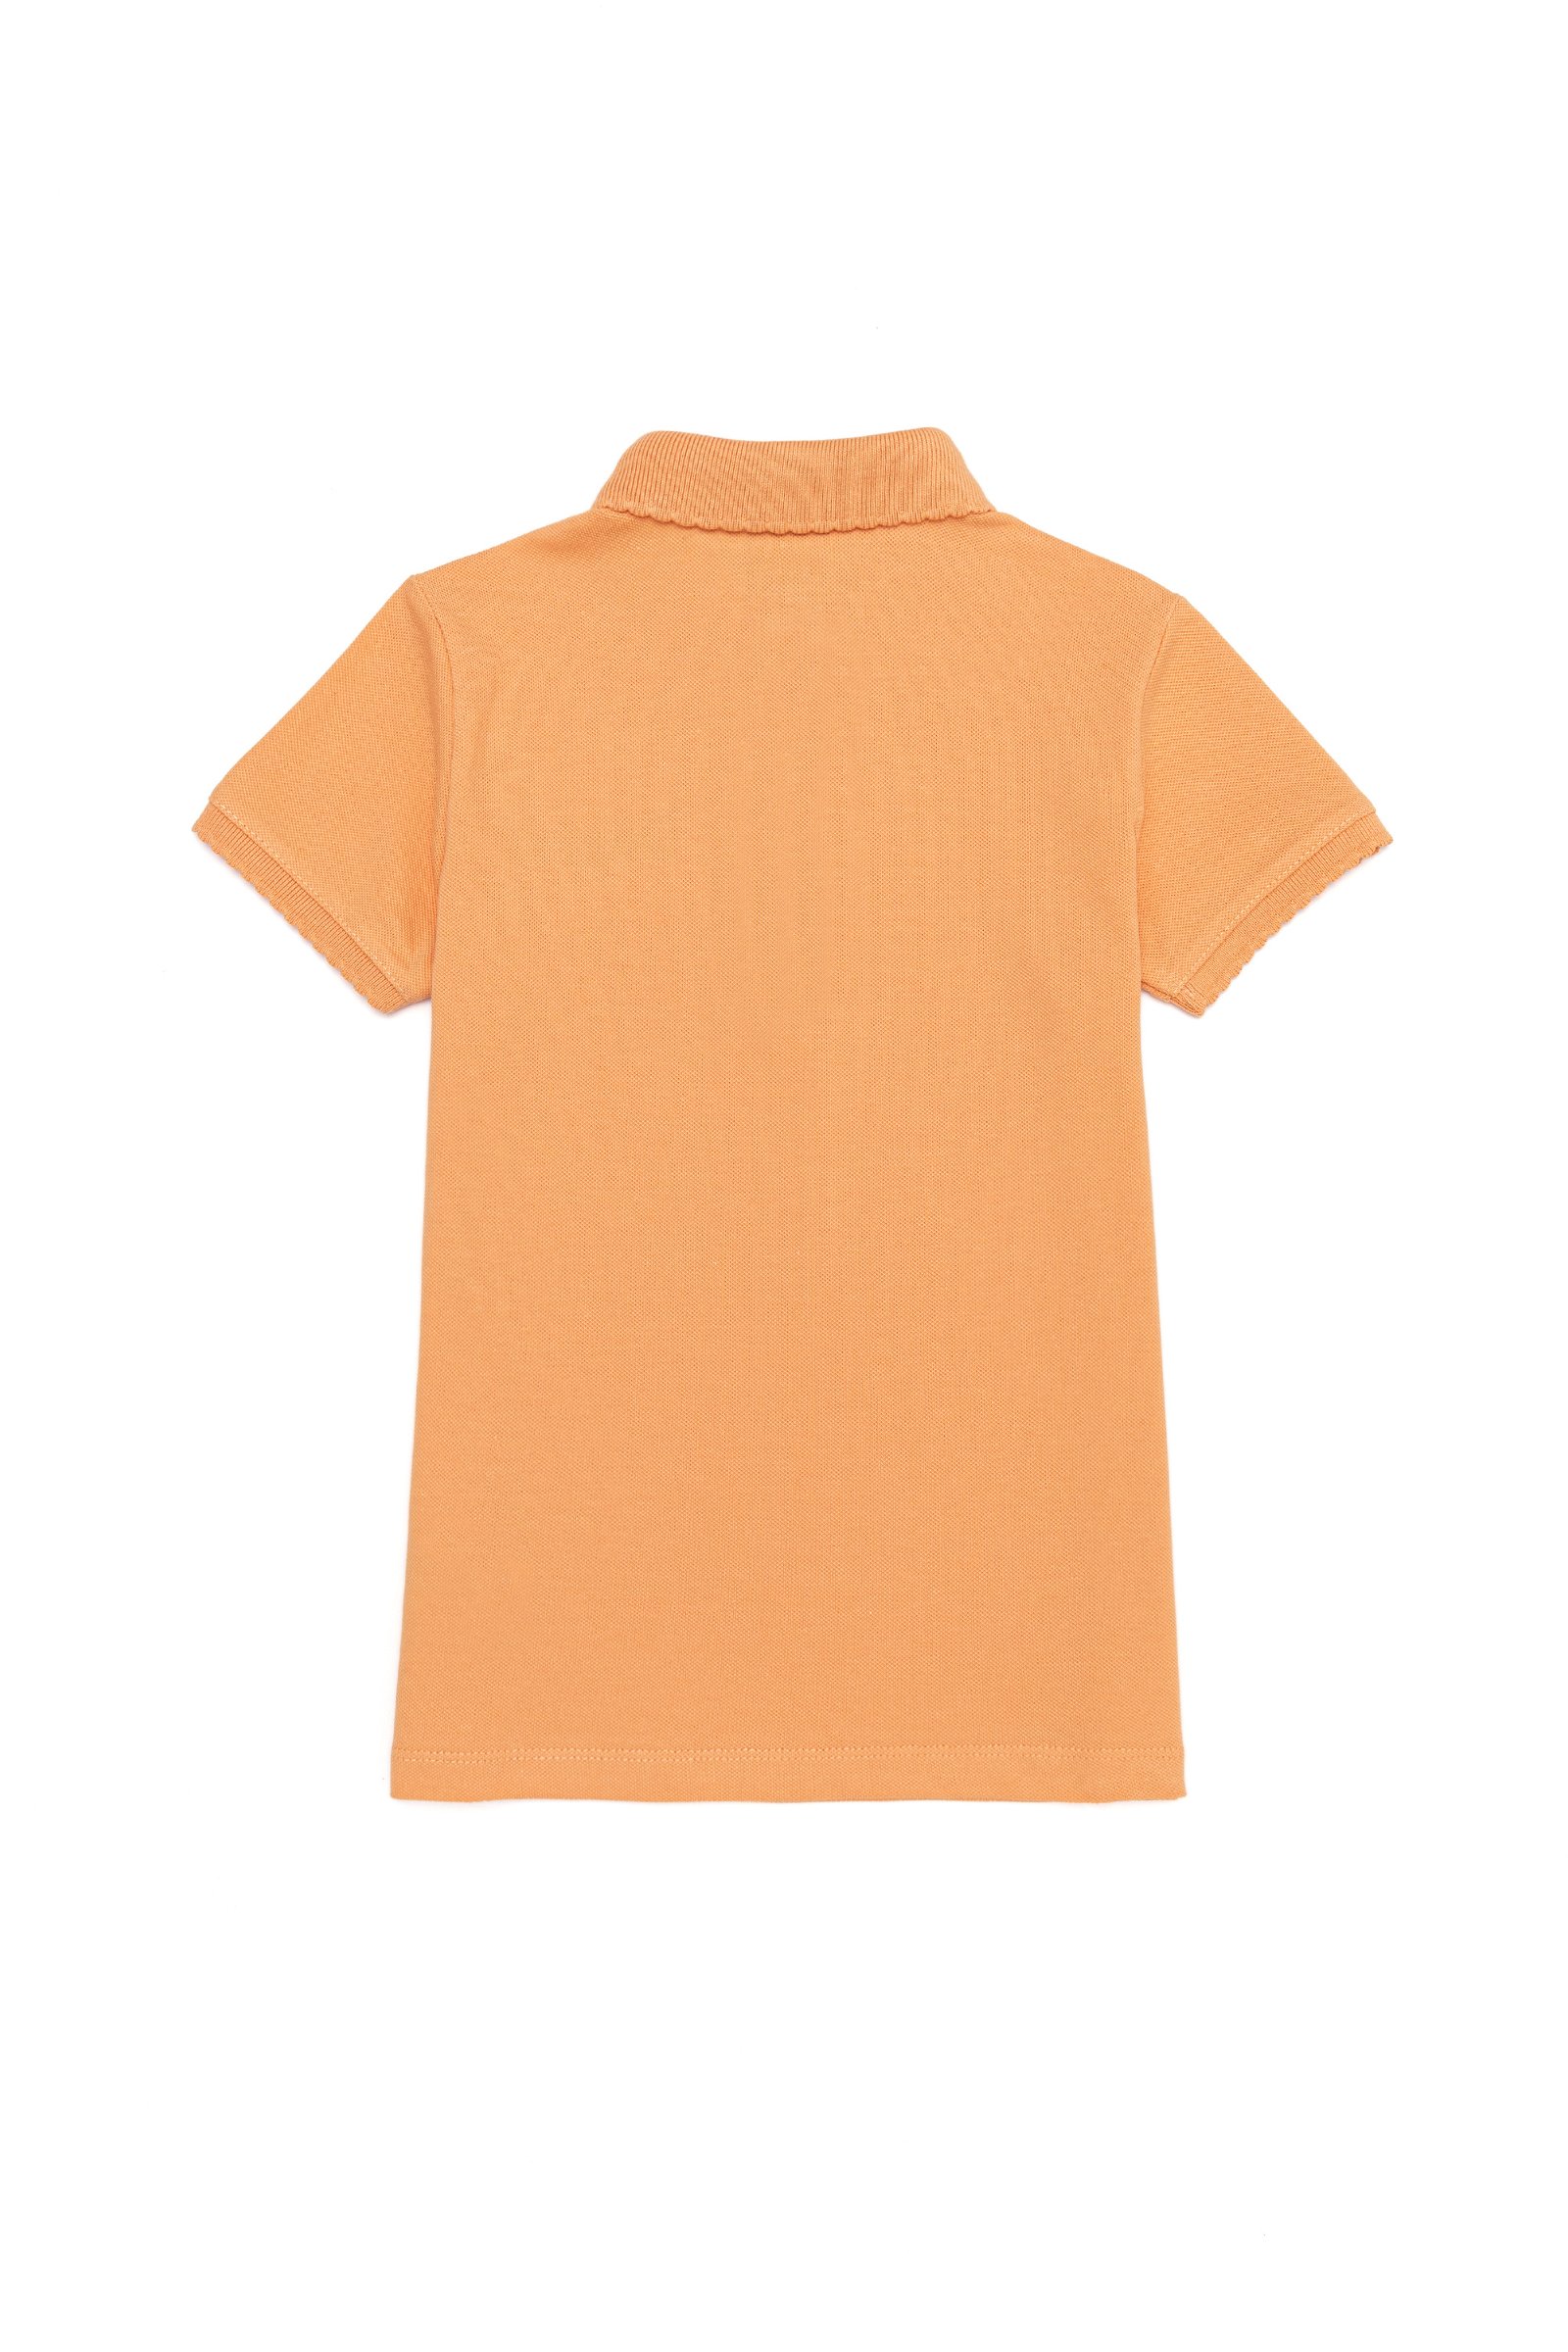 تی شرت یقه پولو زرد  استاندارد فیت  دخترانه یو اس پولو